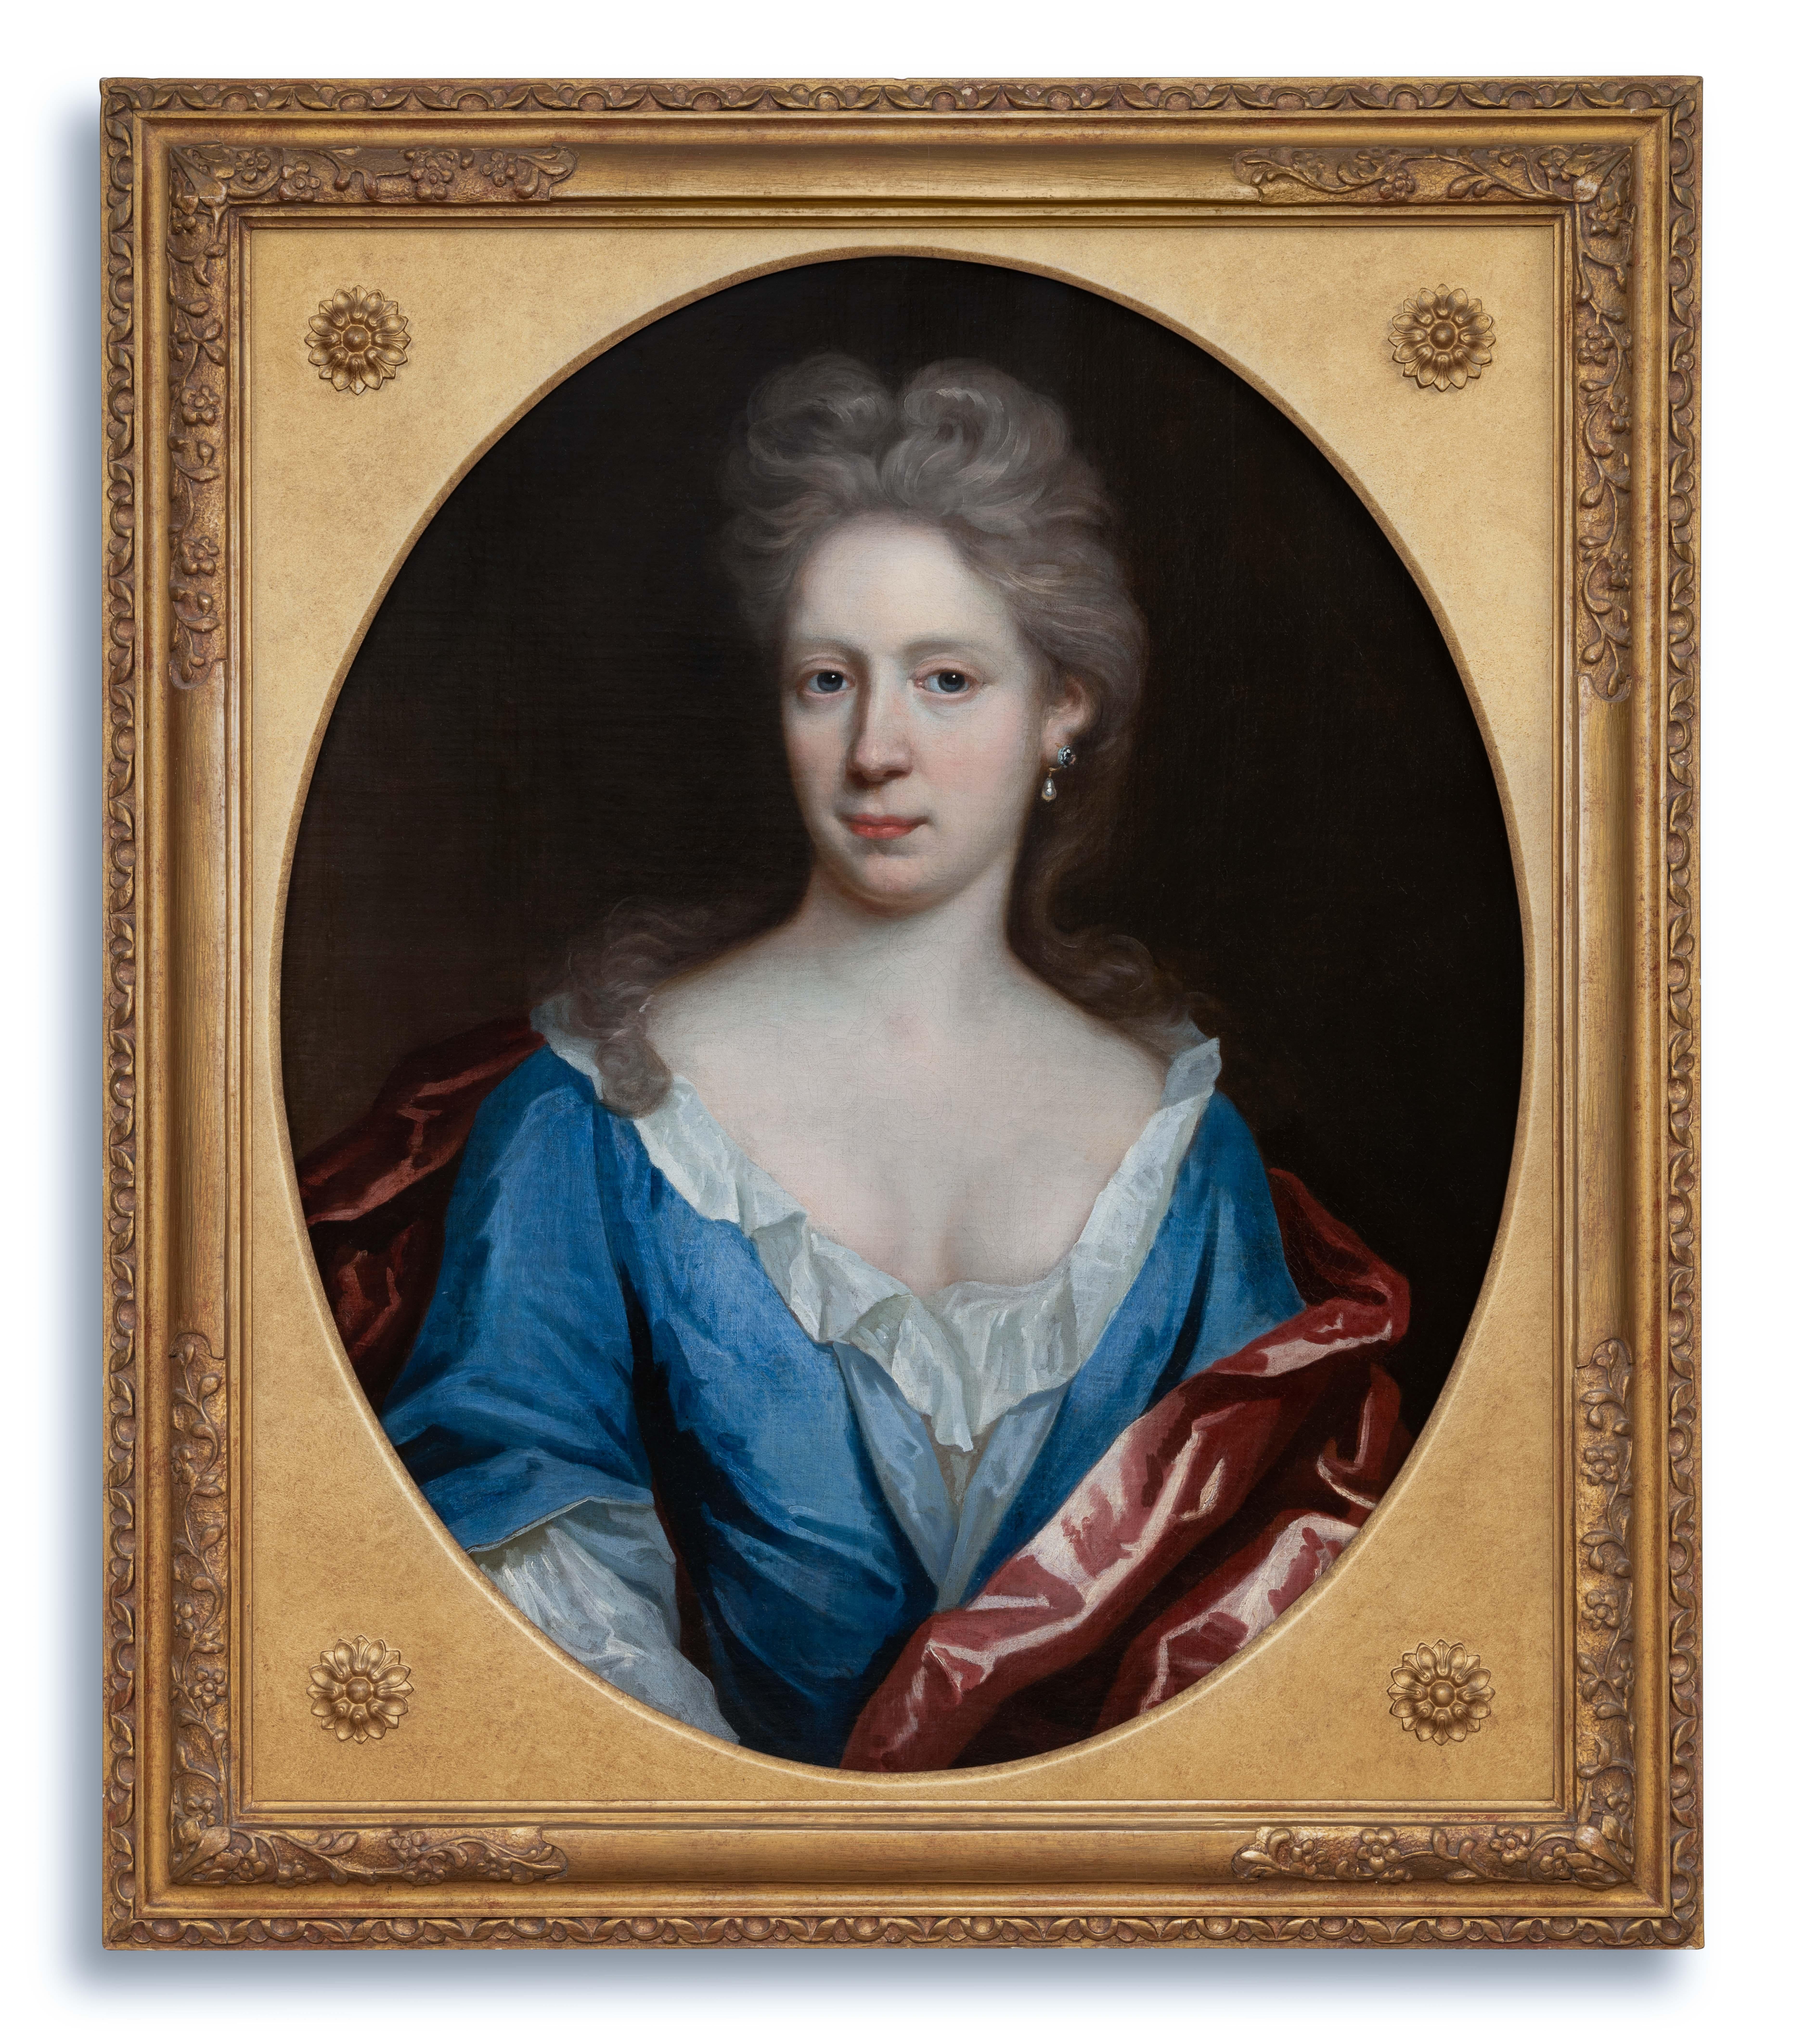 Portrait of a Lady in Blue Silk Dress & Crimson Mantle c.1695; by Thomas Murray